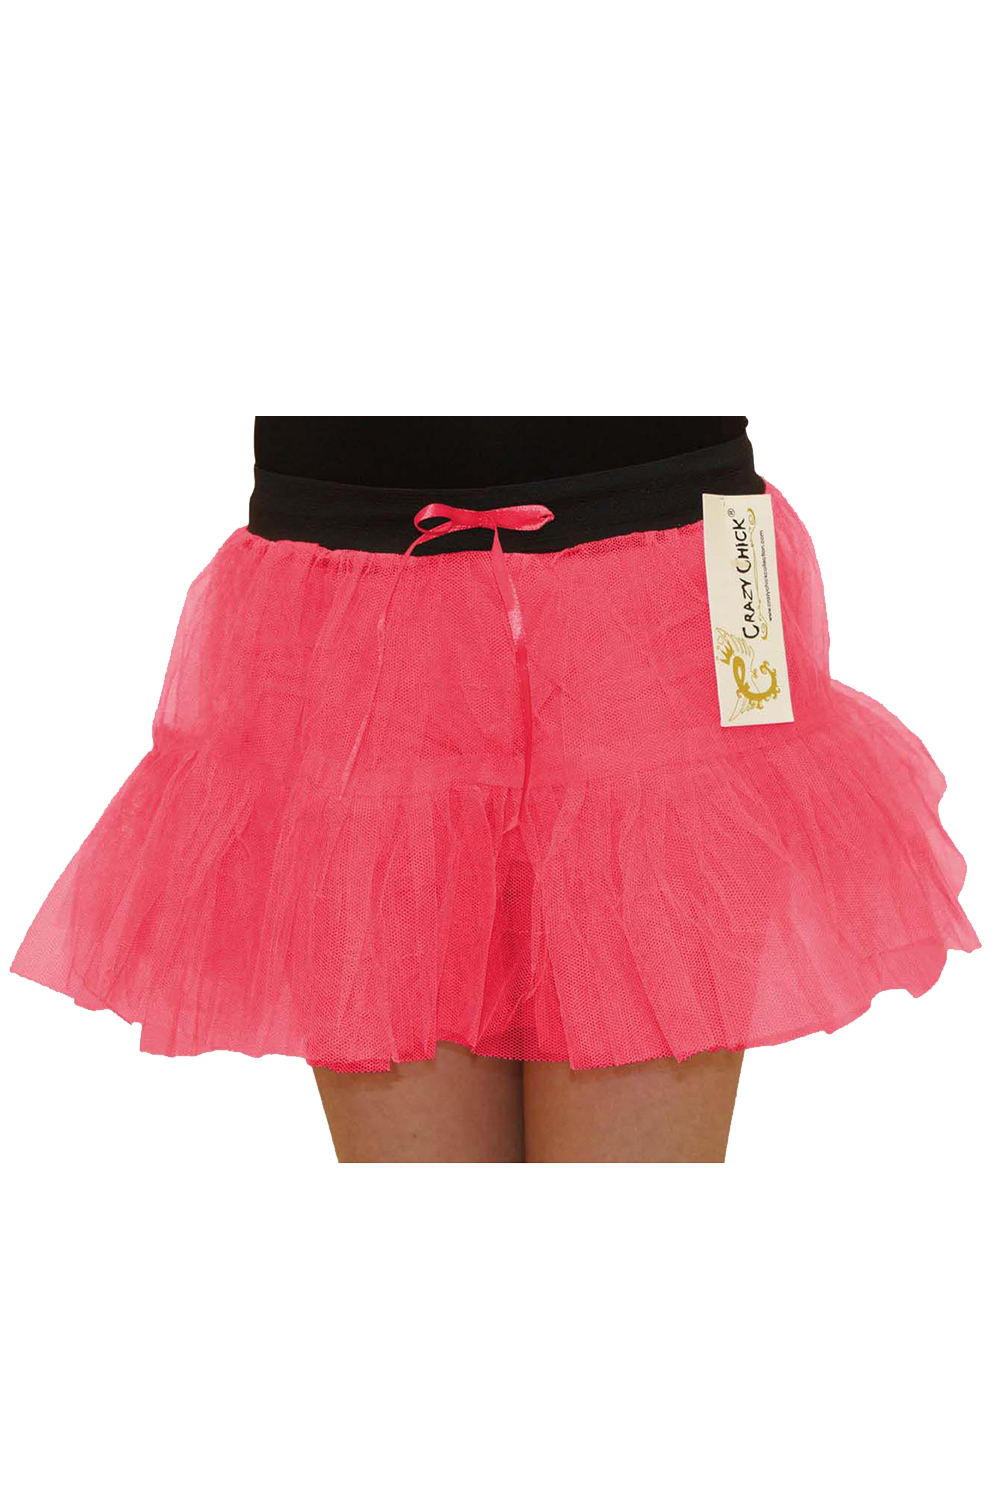 Crazy Chick Girls 2 Layers Pink Tutu Skirt